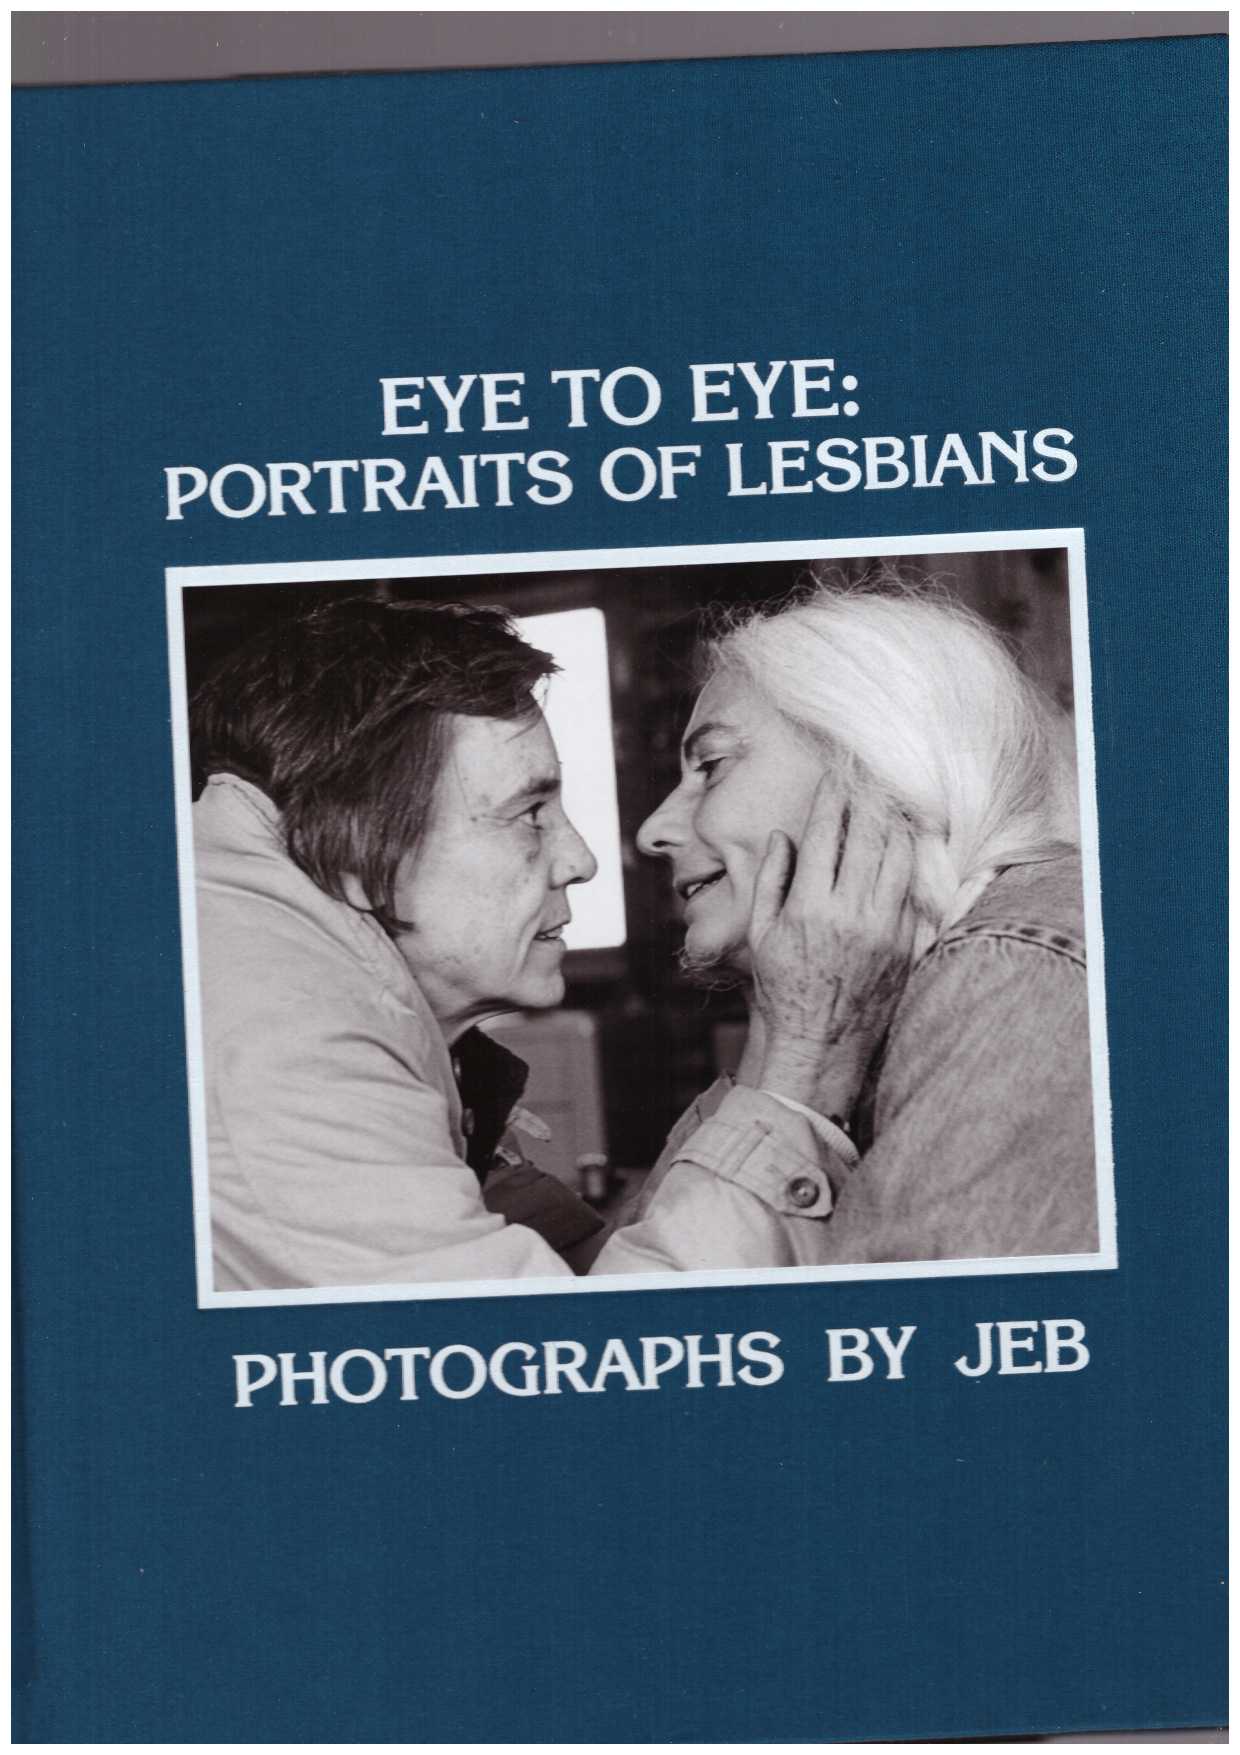 JEB - Eye to Eye: Portraits of Lesbians